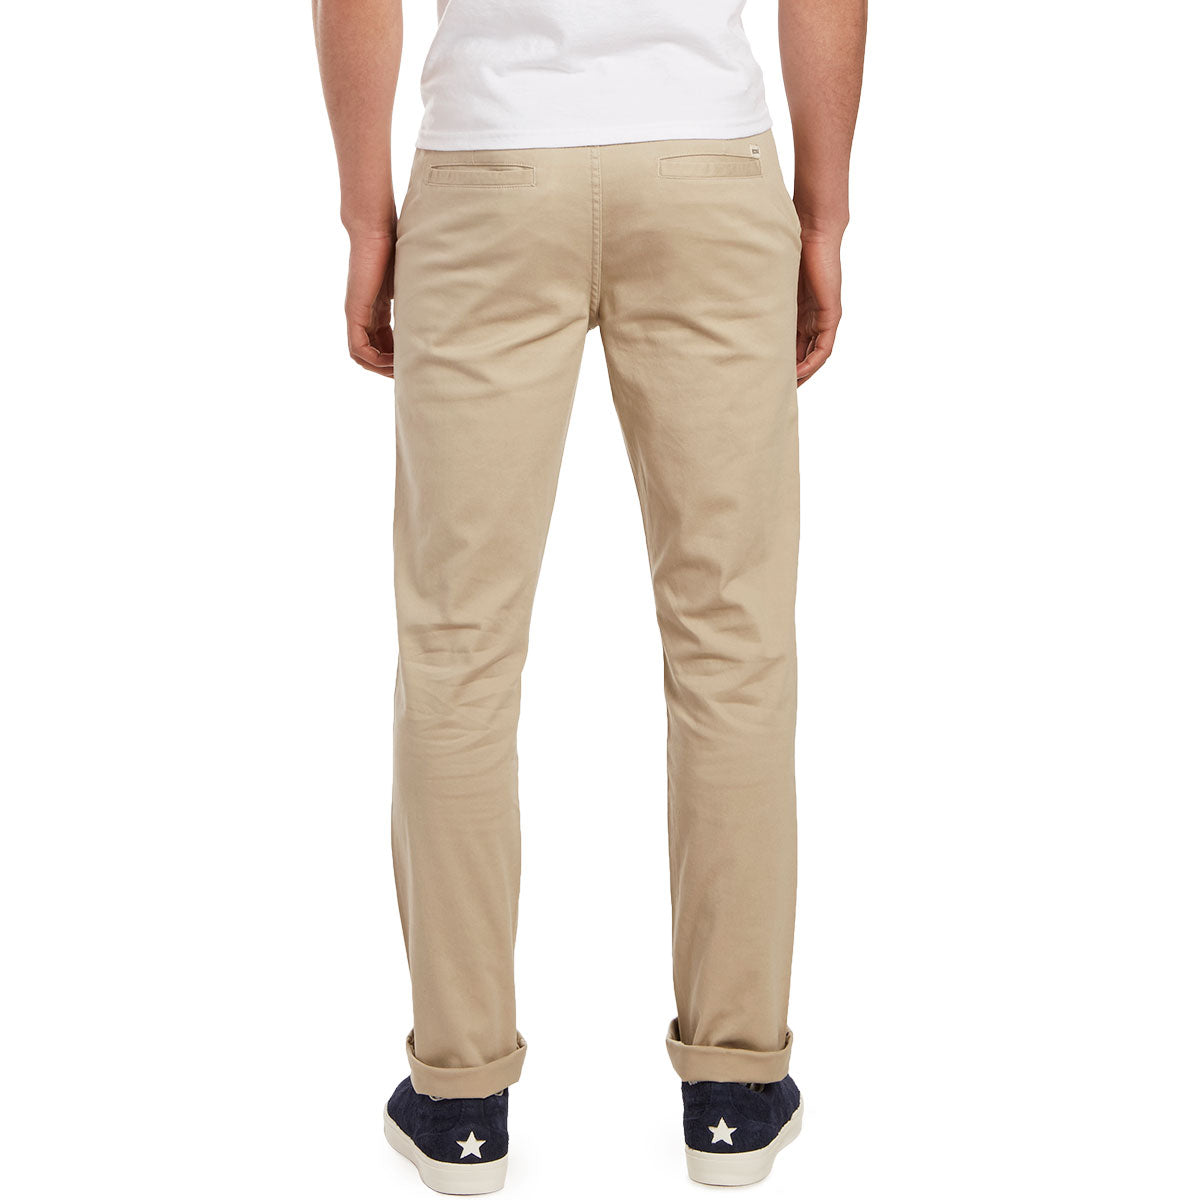 CCS Slim Fit Chino Pants - Light Khaki